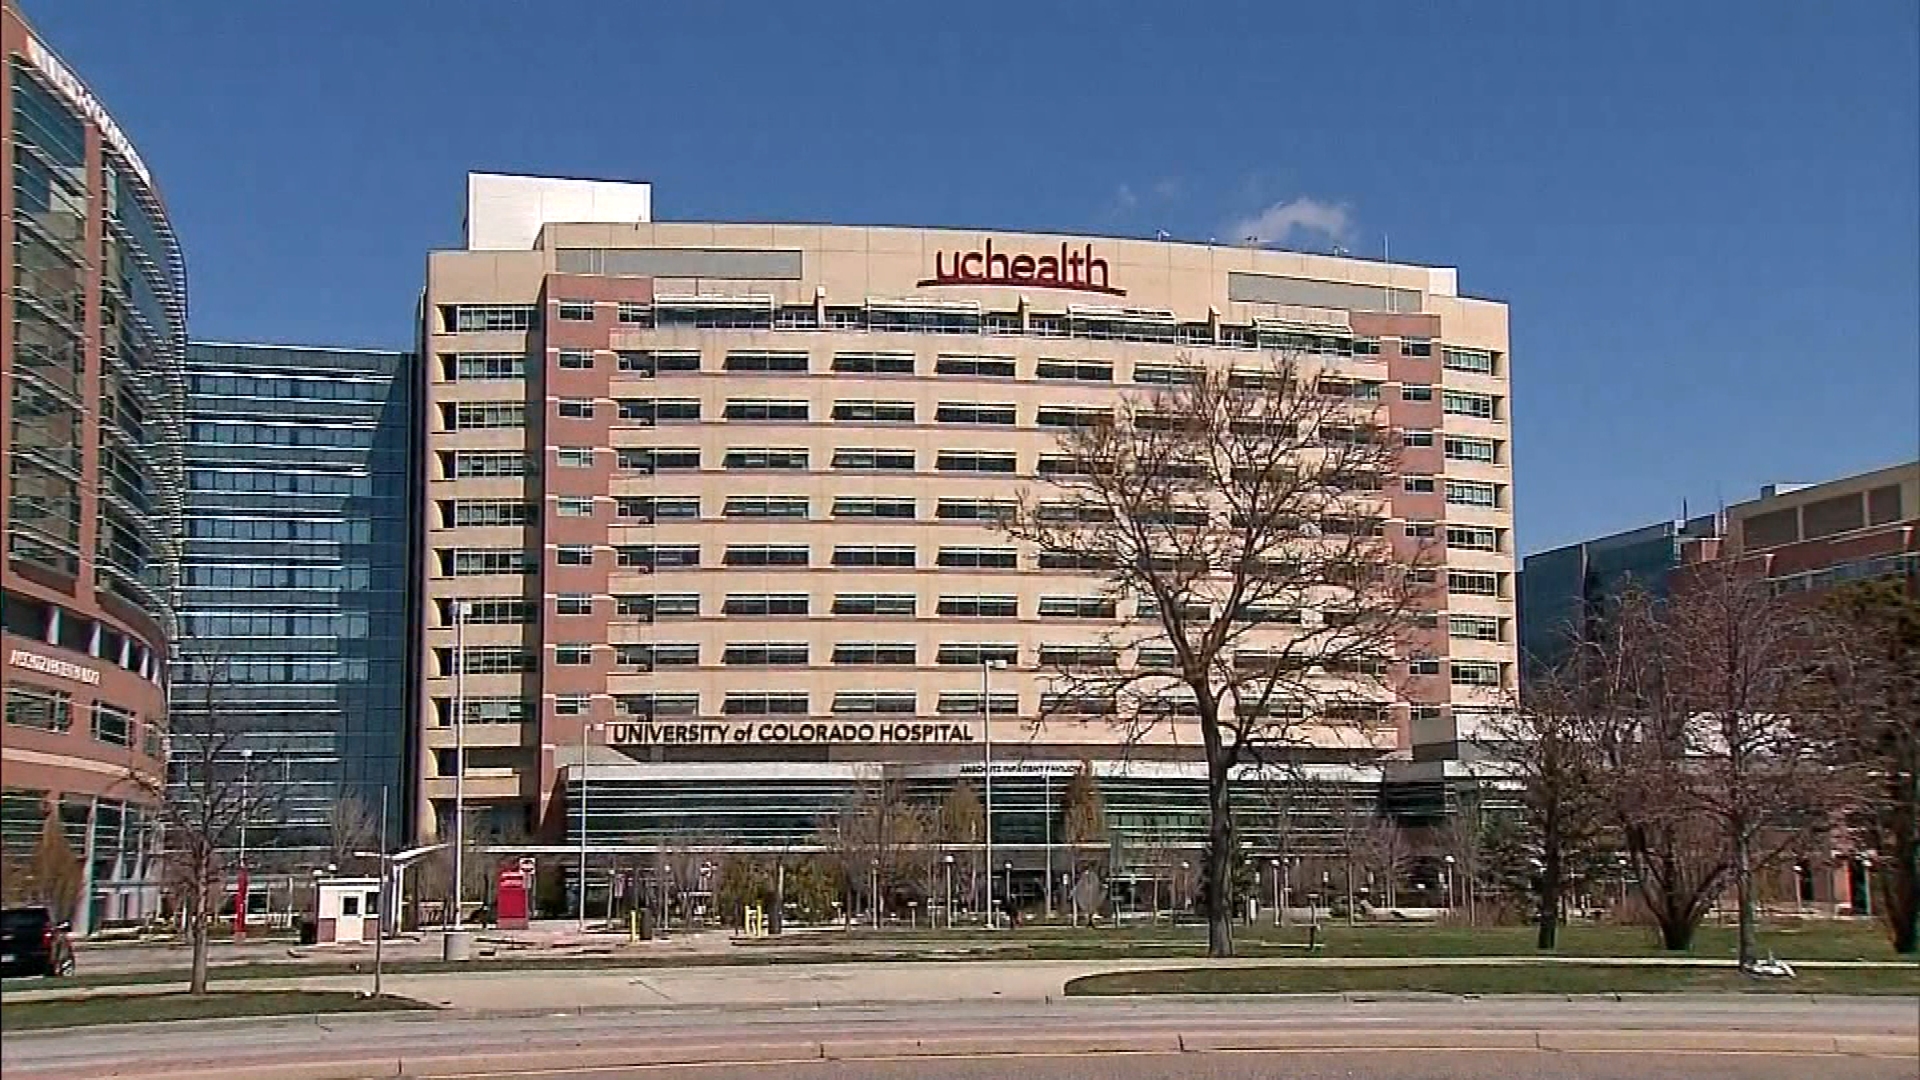 UCHealth University of Colorado Hospital